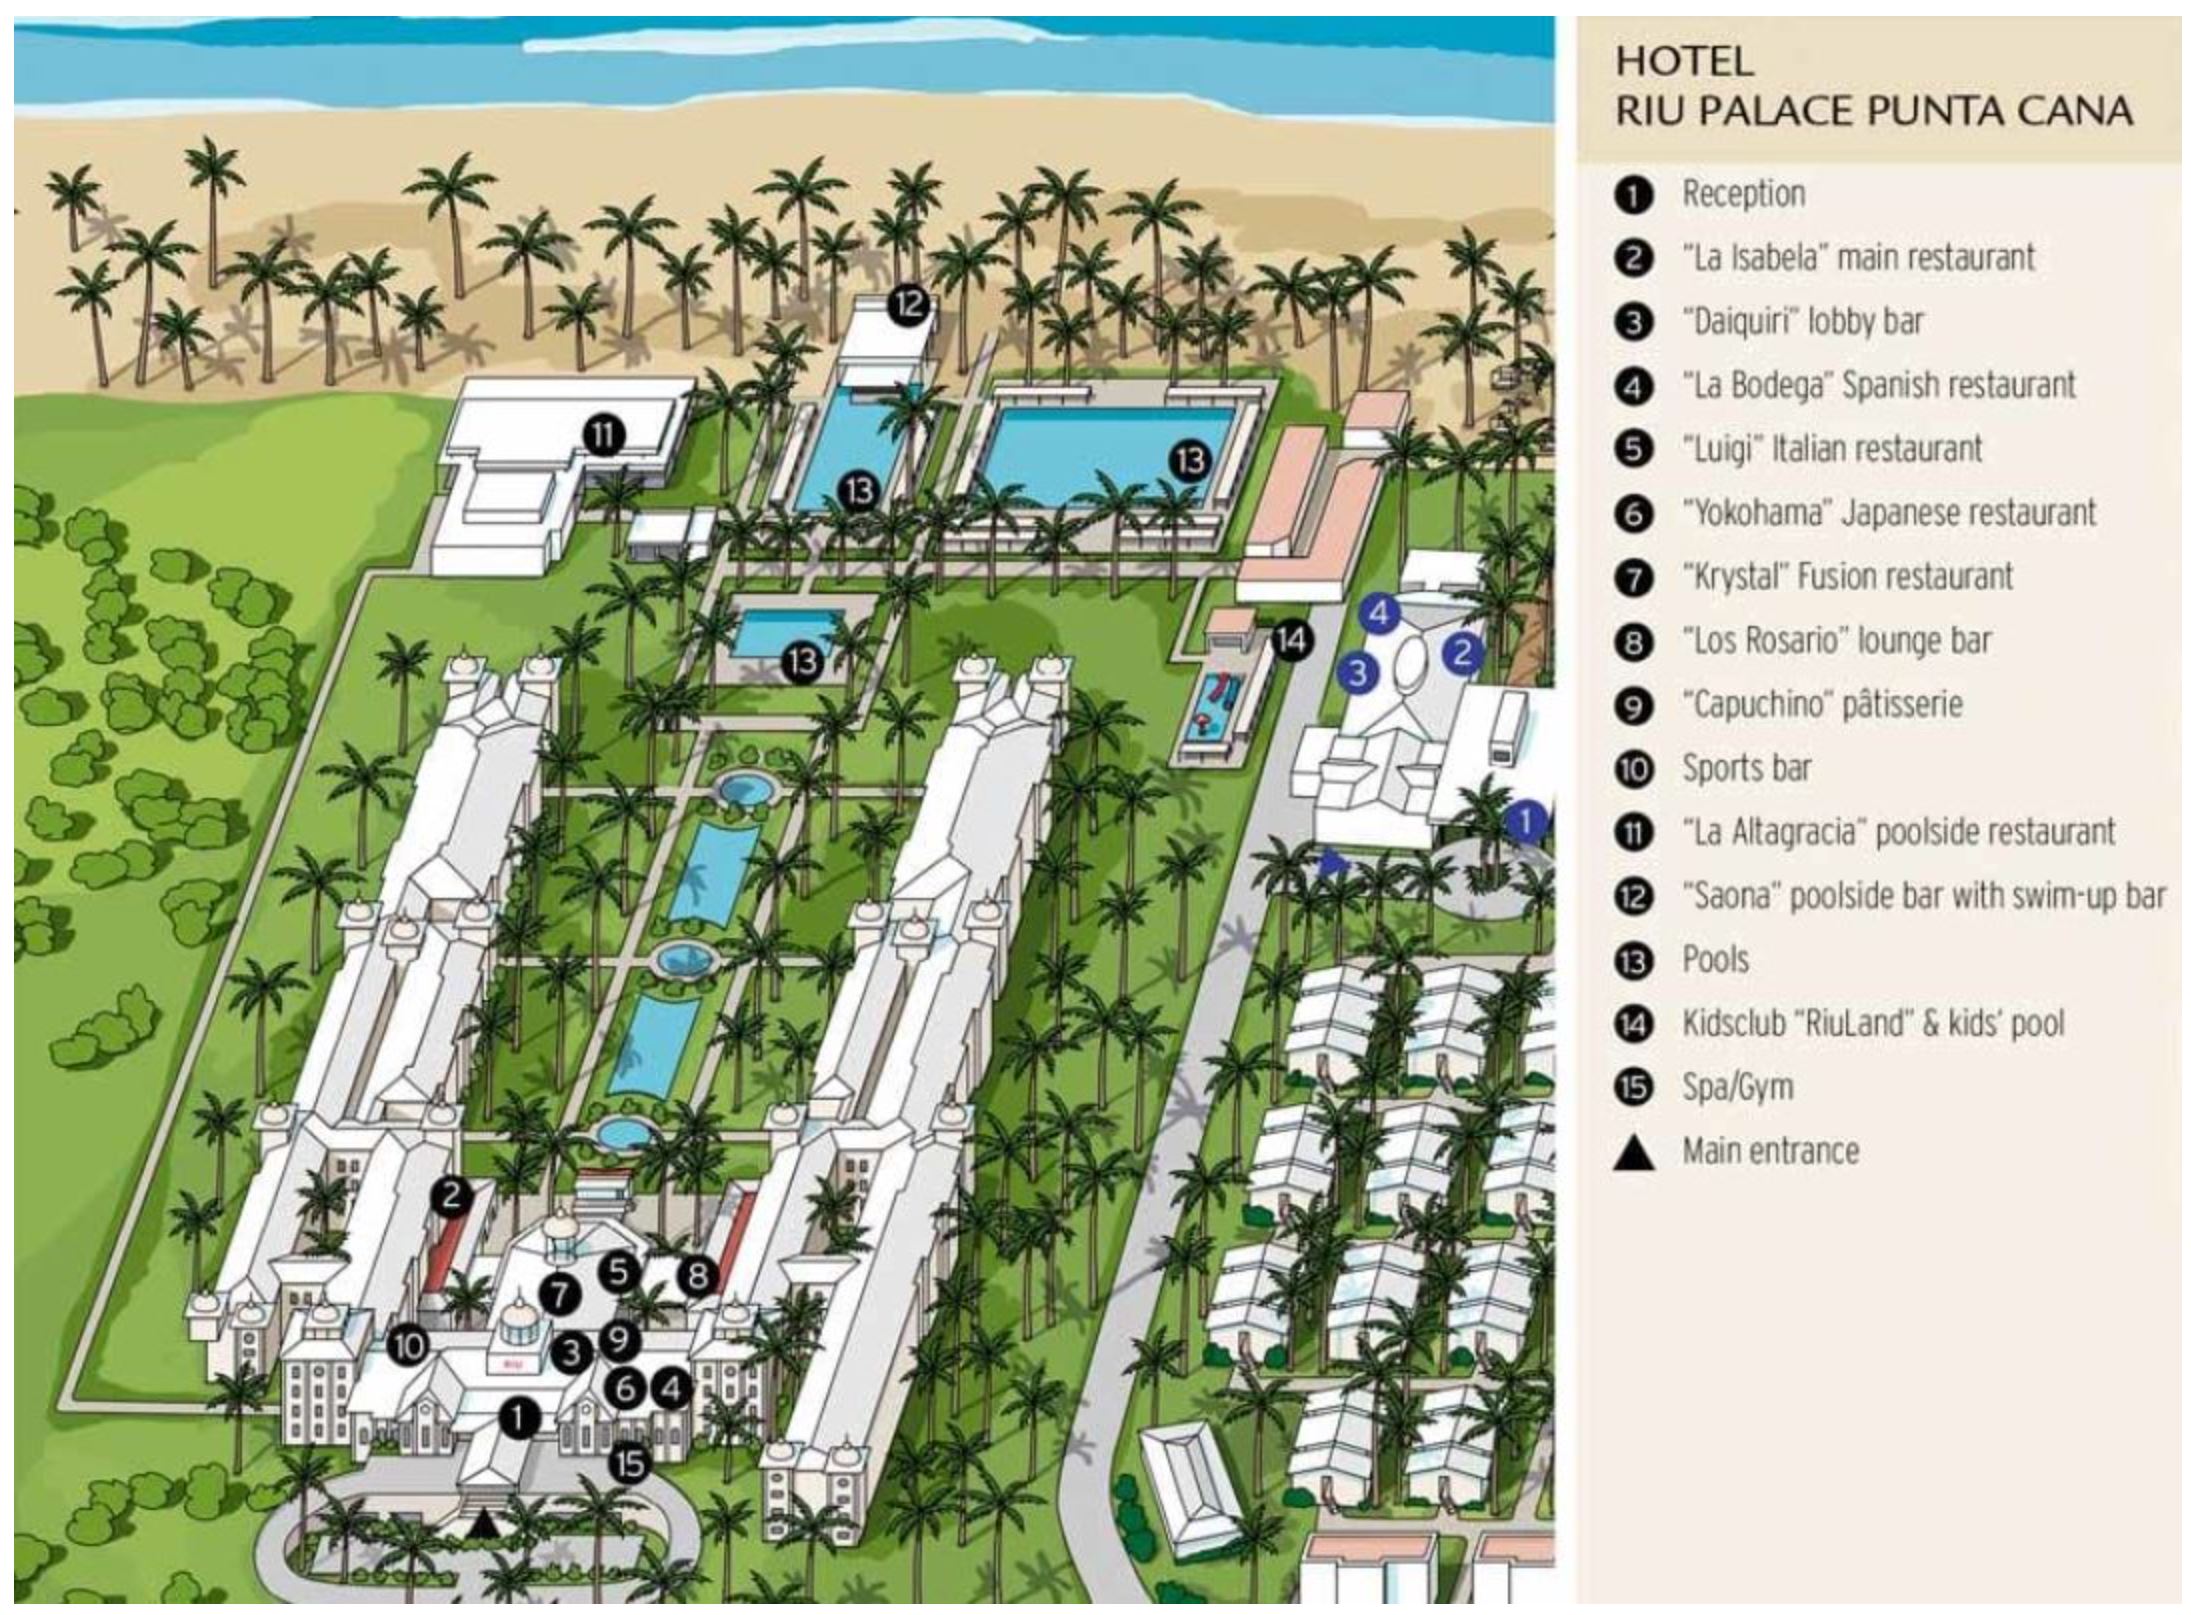 Riu Palace Punta Cana resort map - Guide To DR